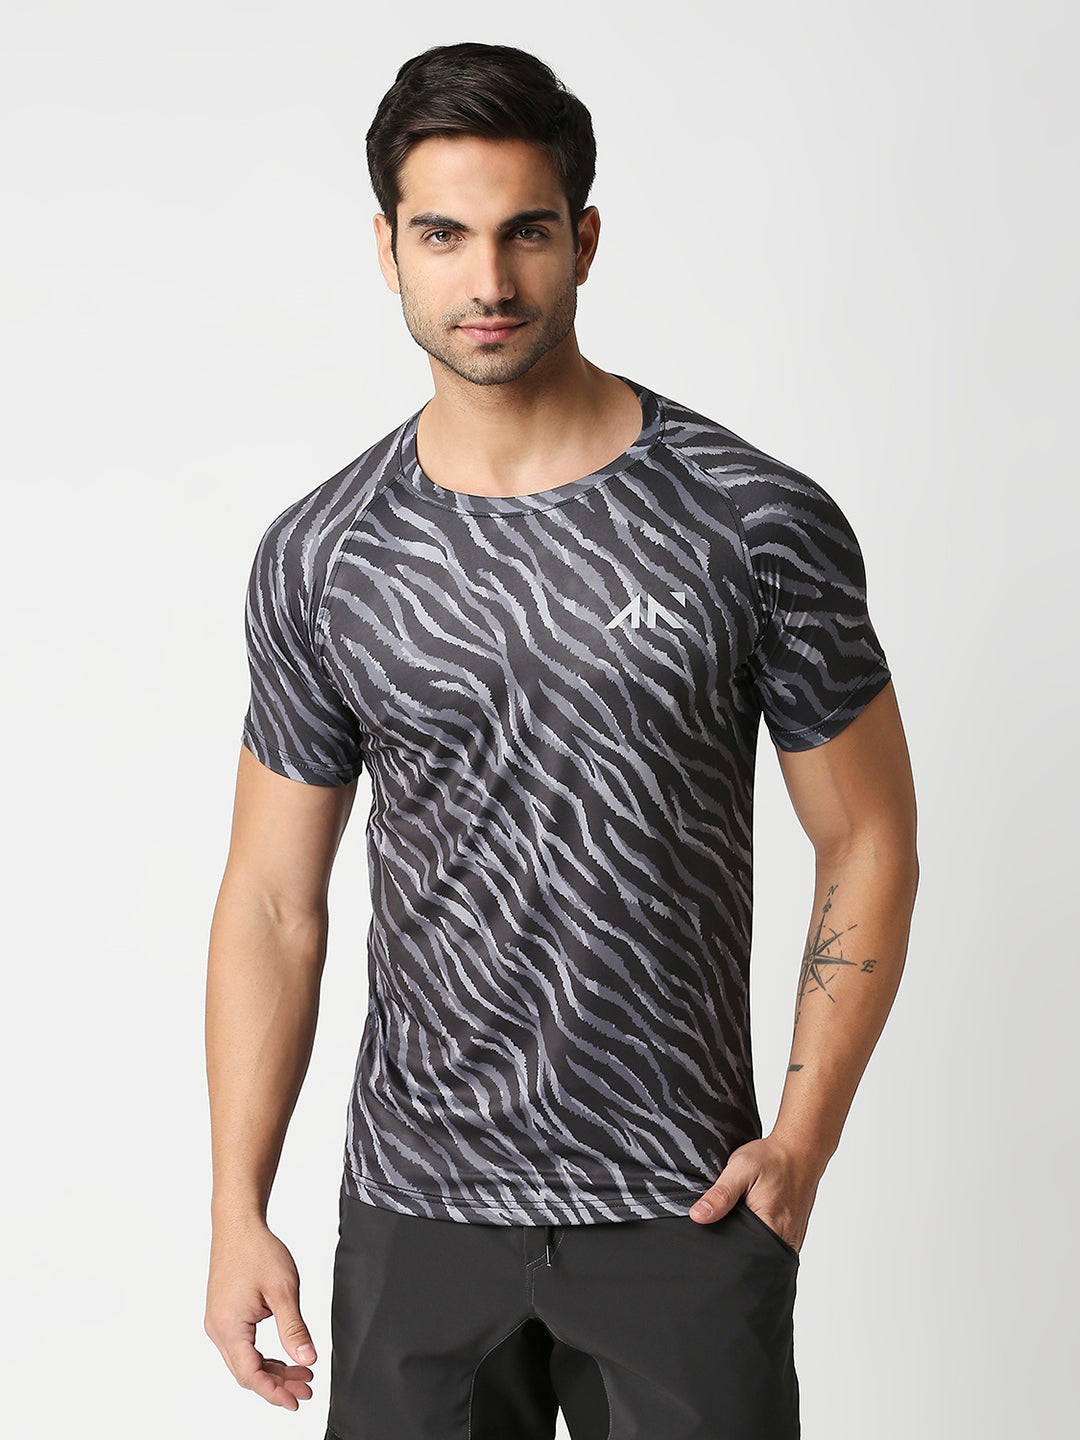 Animal Black printed gym aesthetic nation t shirts